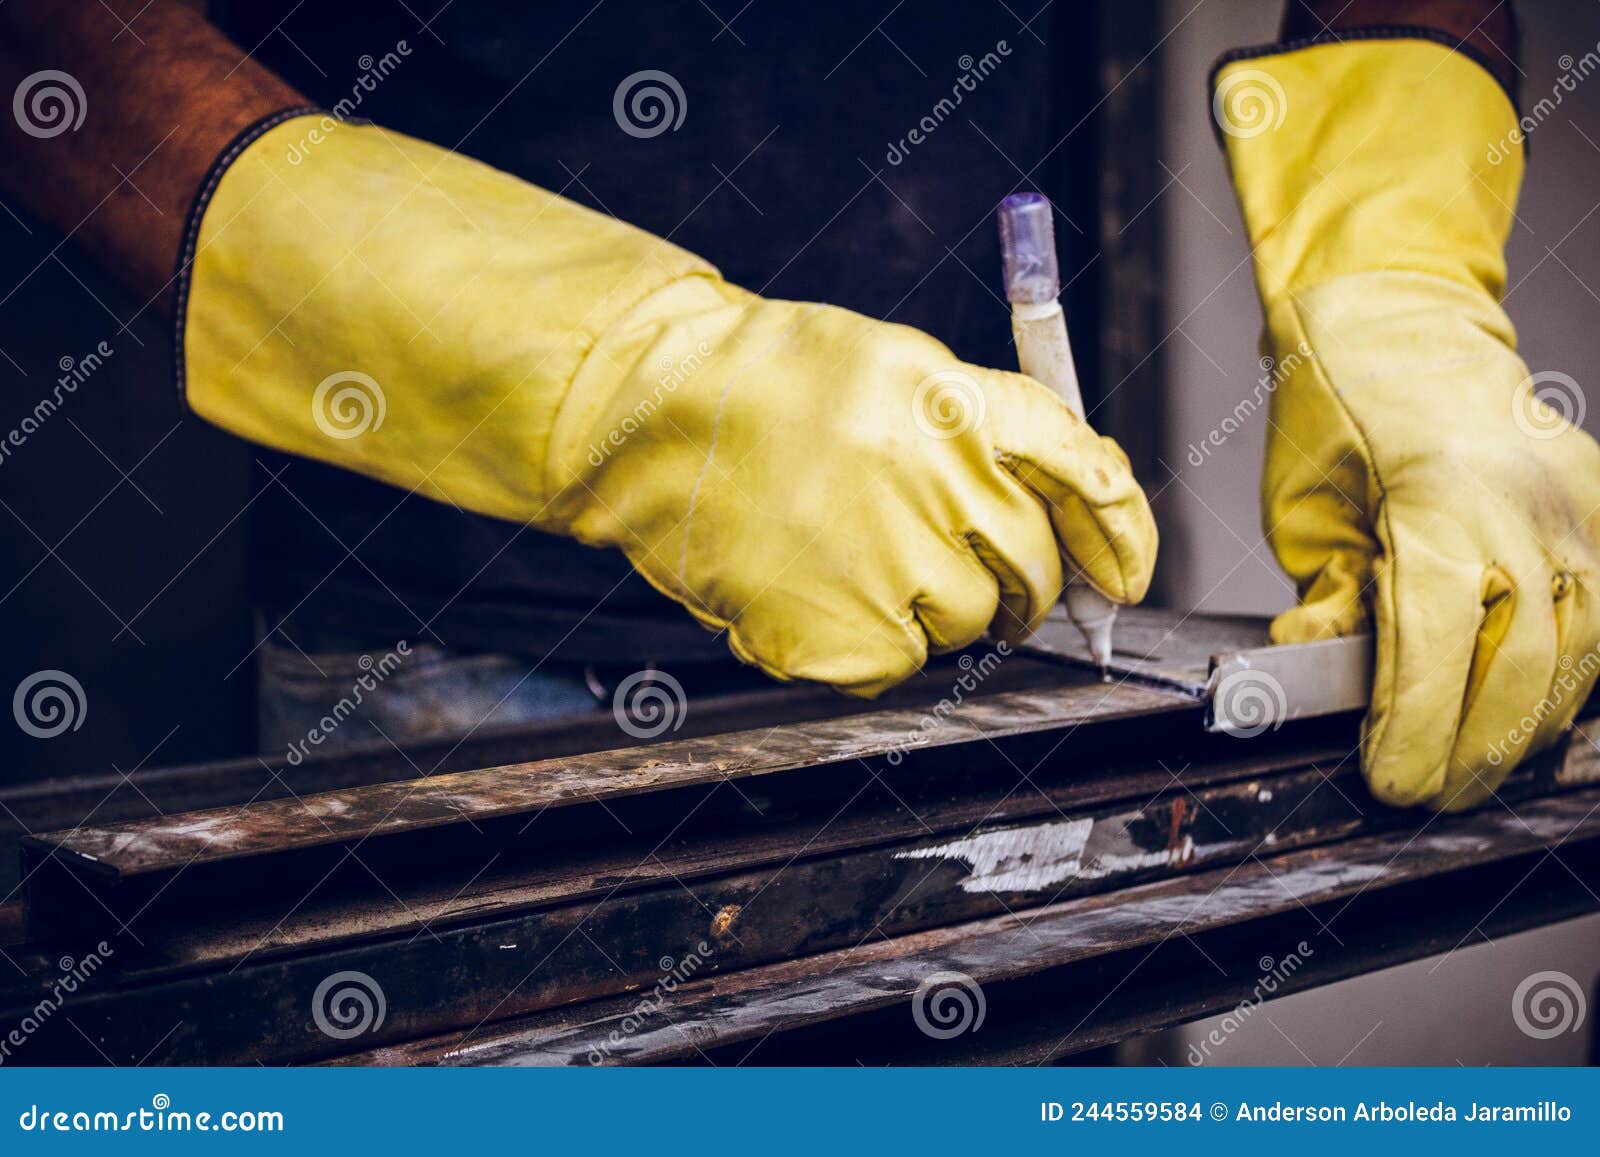 worker man marking to cut